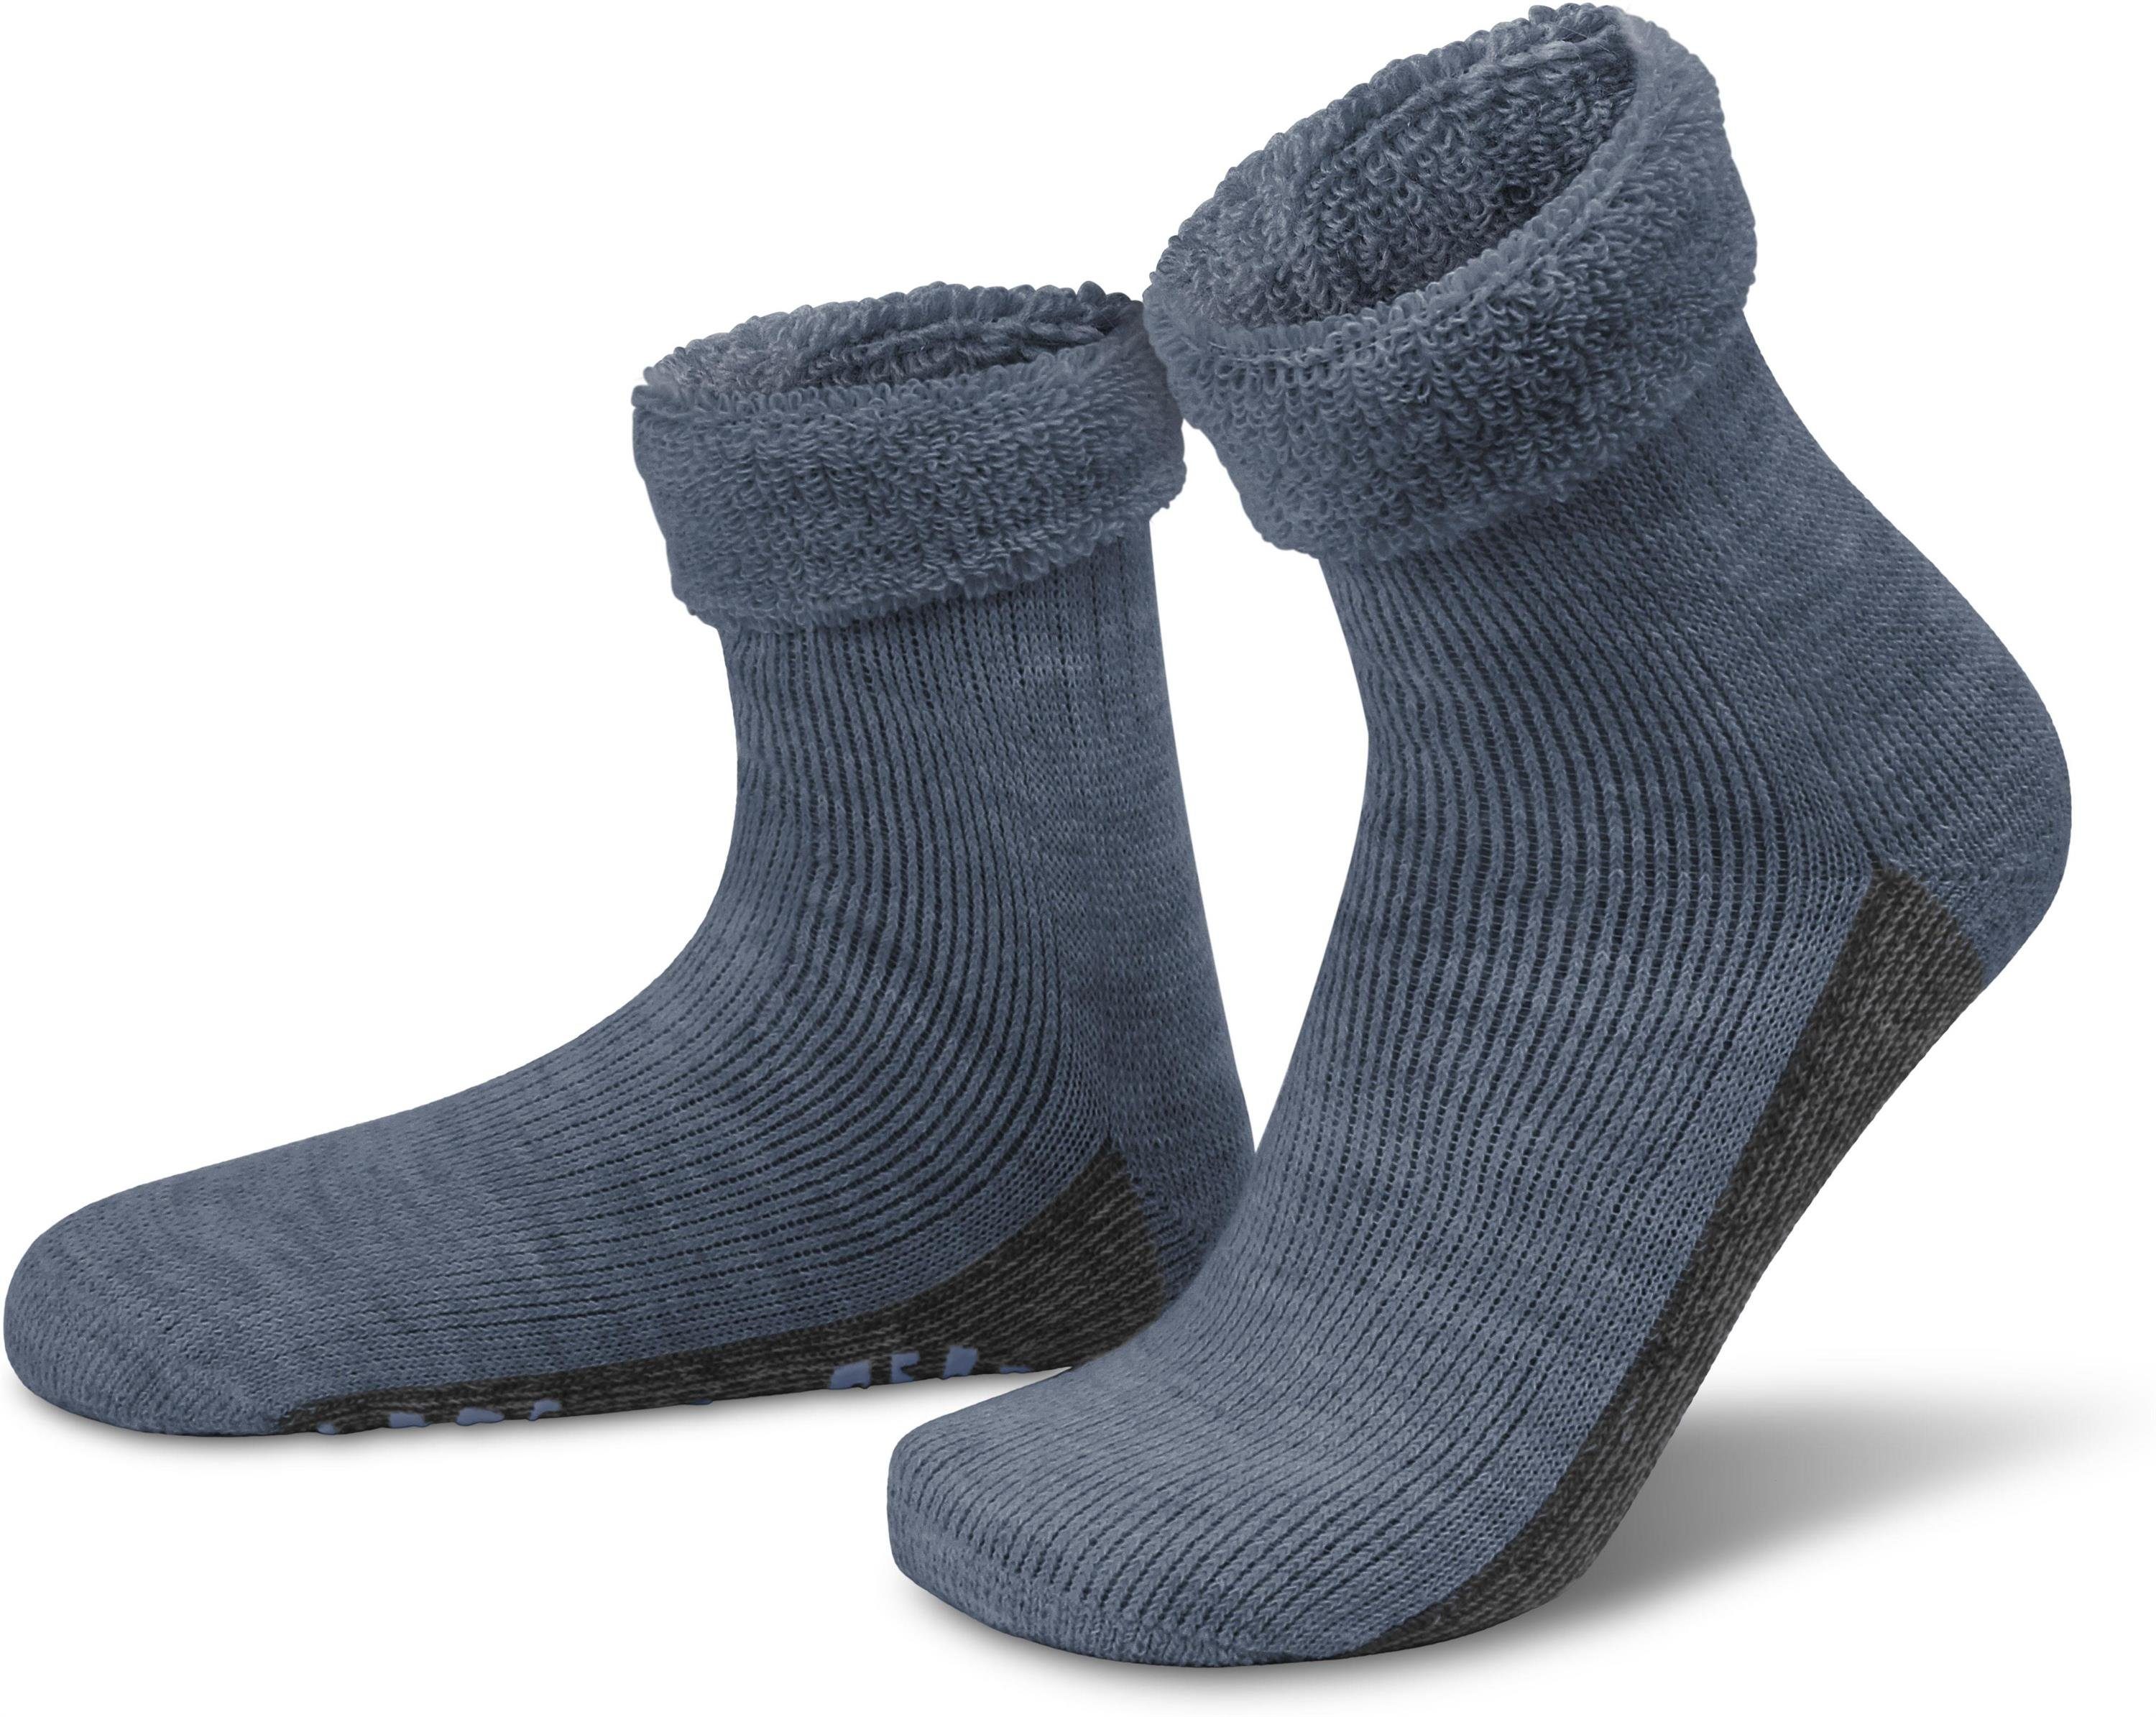 normani ABS-Socken Alpaka-Wollsocken mit hochwertige Jeans Paar) (1 ABS-Druck Alpaka-Wolle